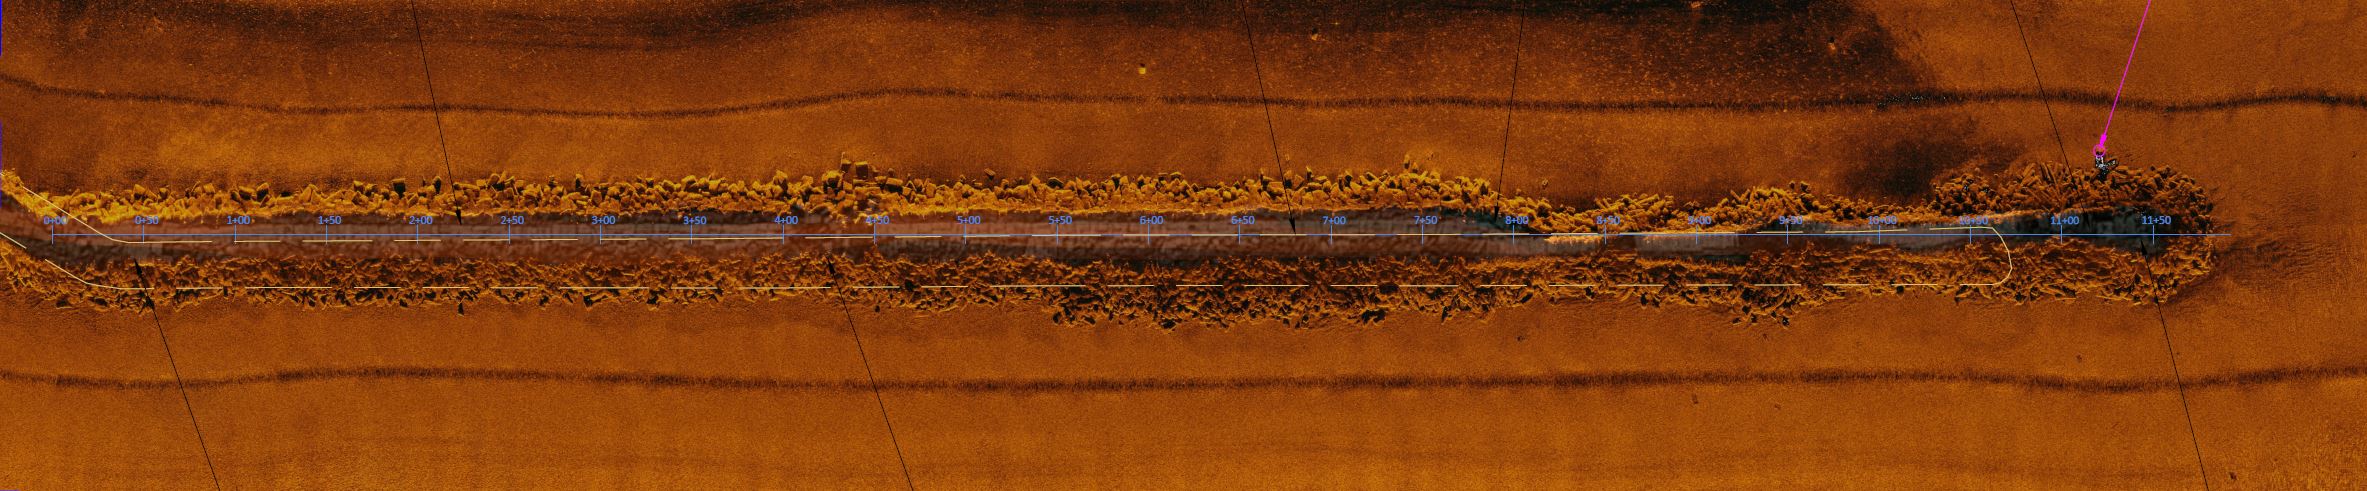 HYANNIS BREAKWATER SIDE SCAN Closeup image